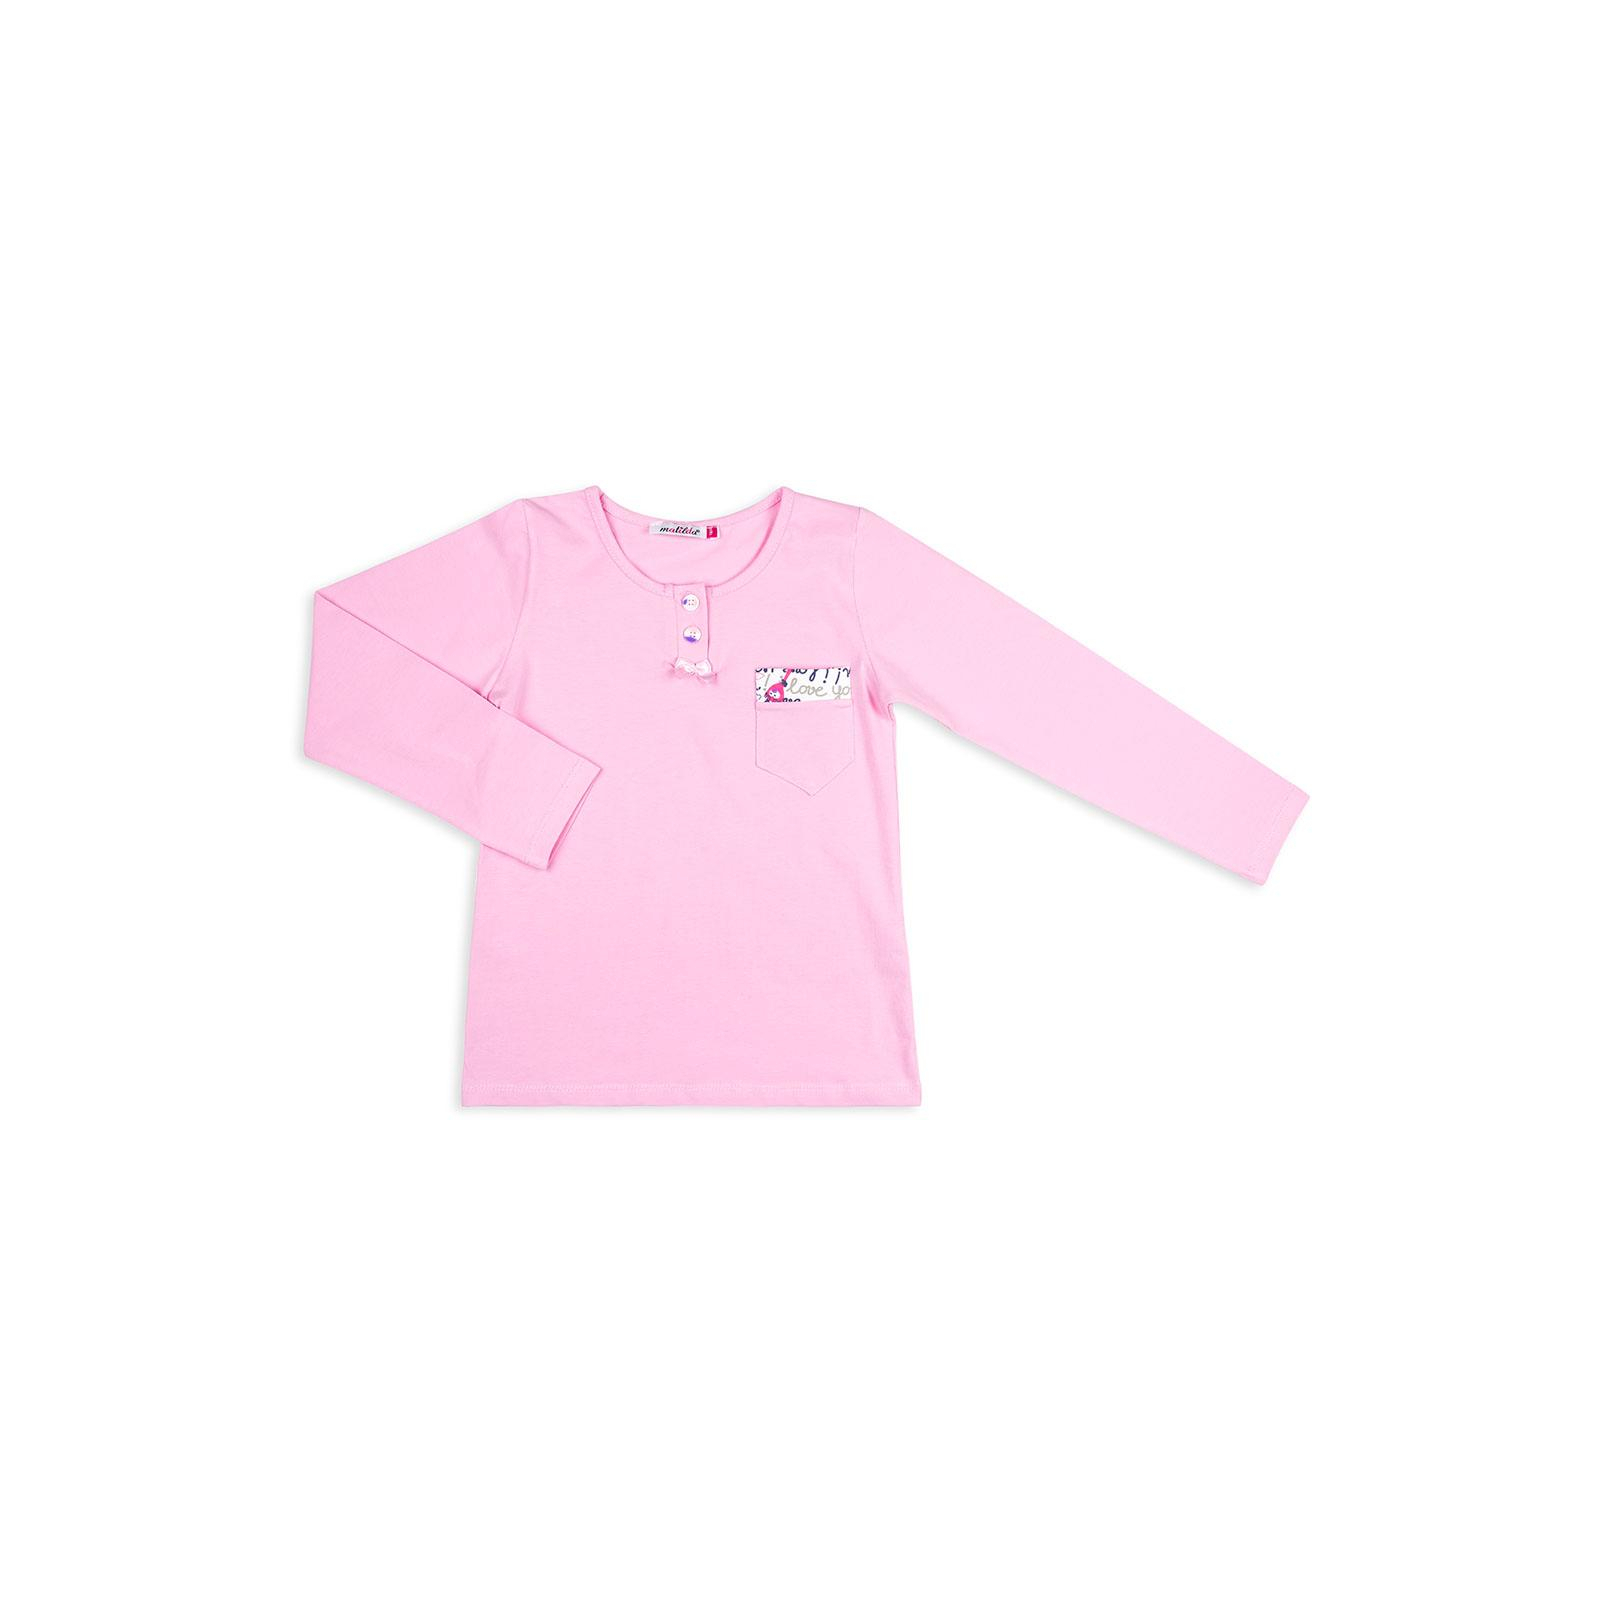 Пижама Matilda с котиками (4158-116G-pink) изображение 2